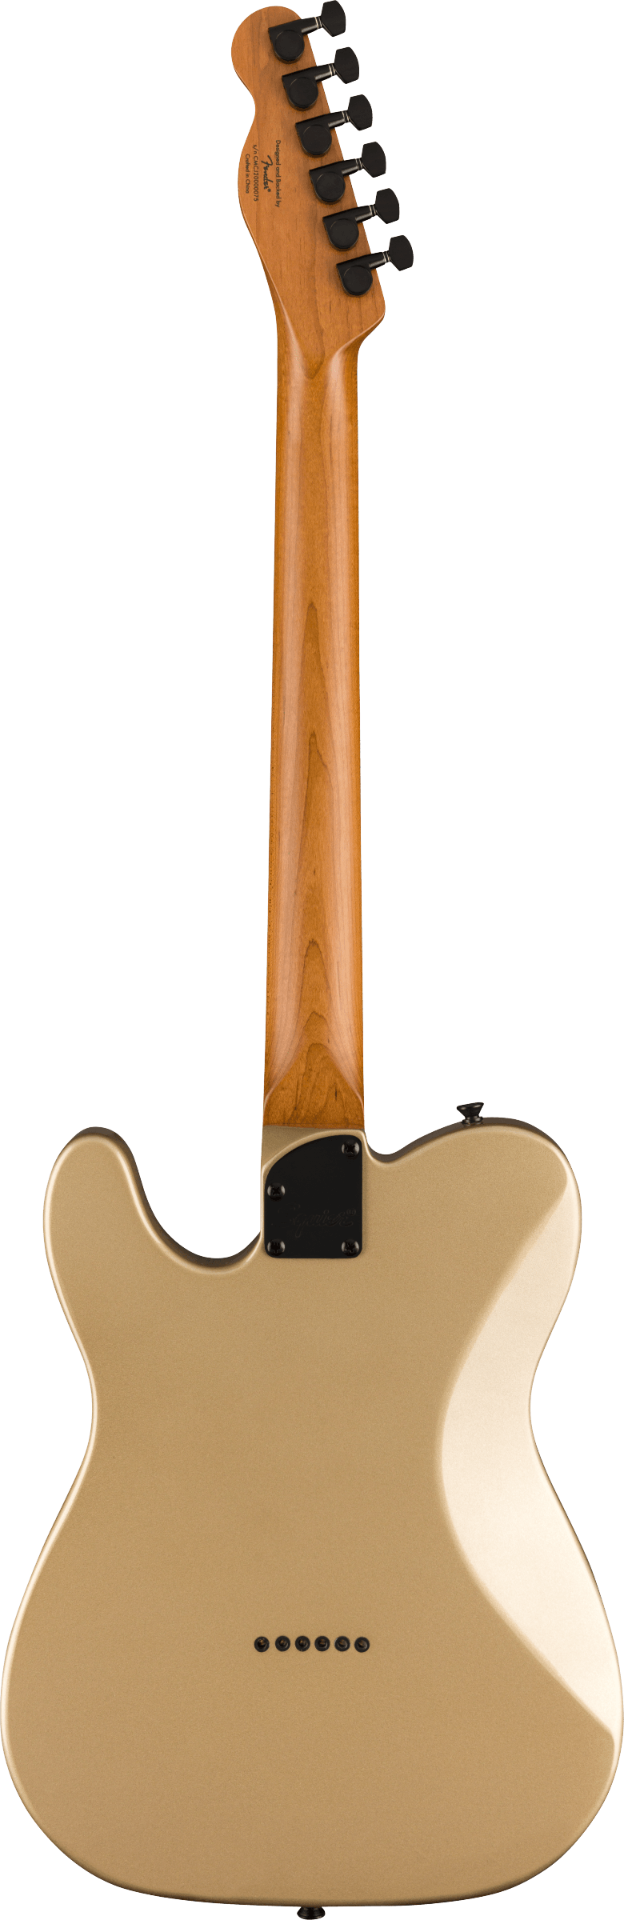 Squier Contemporary Telecaster Electric Guitar in Shoreline Gold Metallic